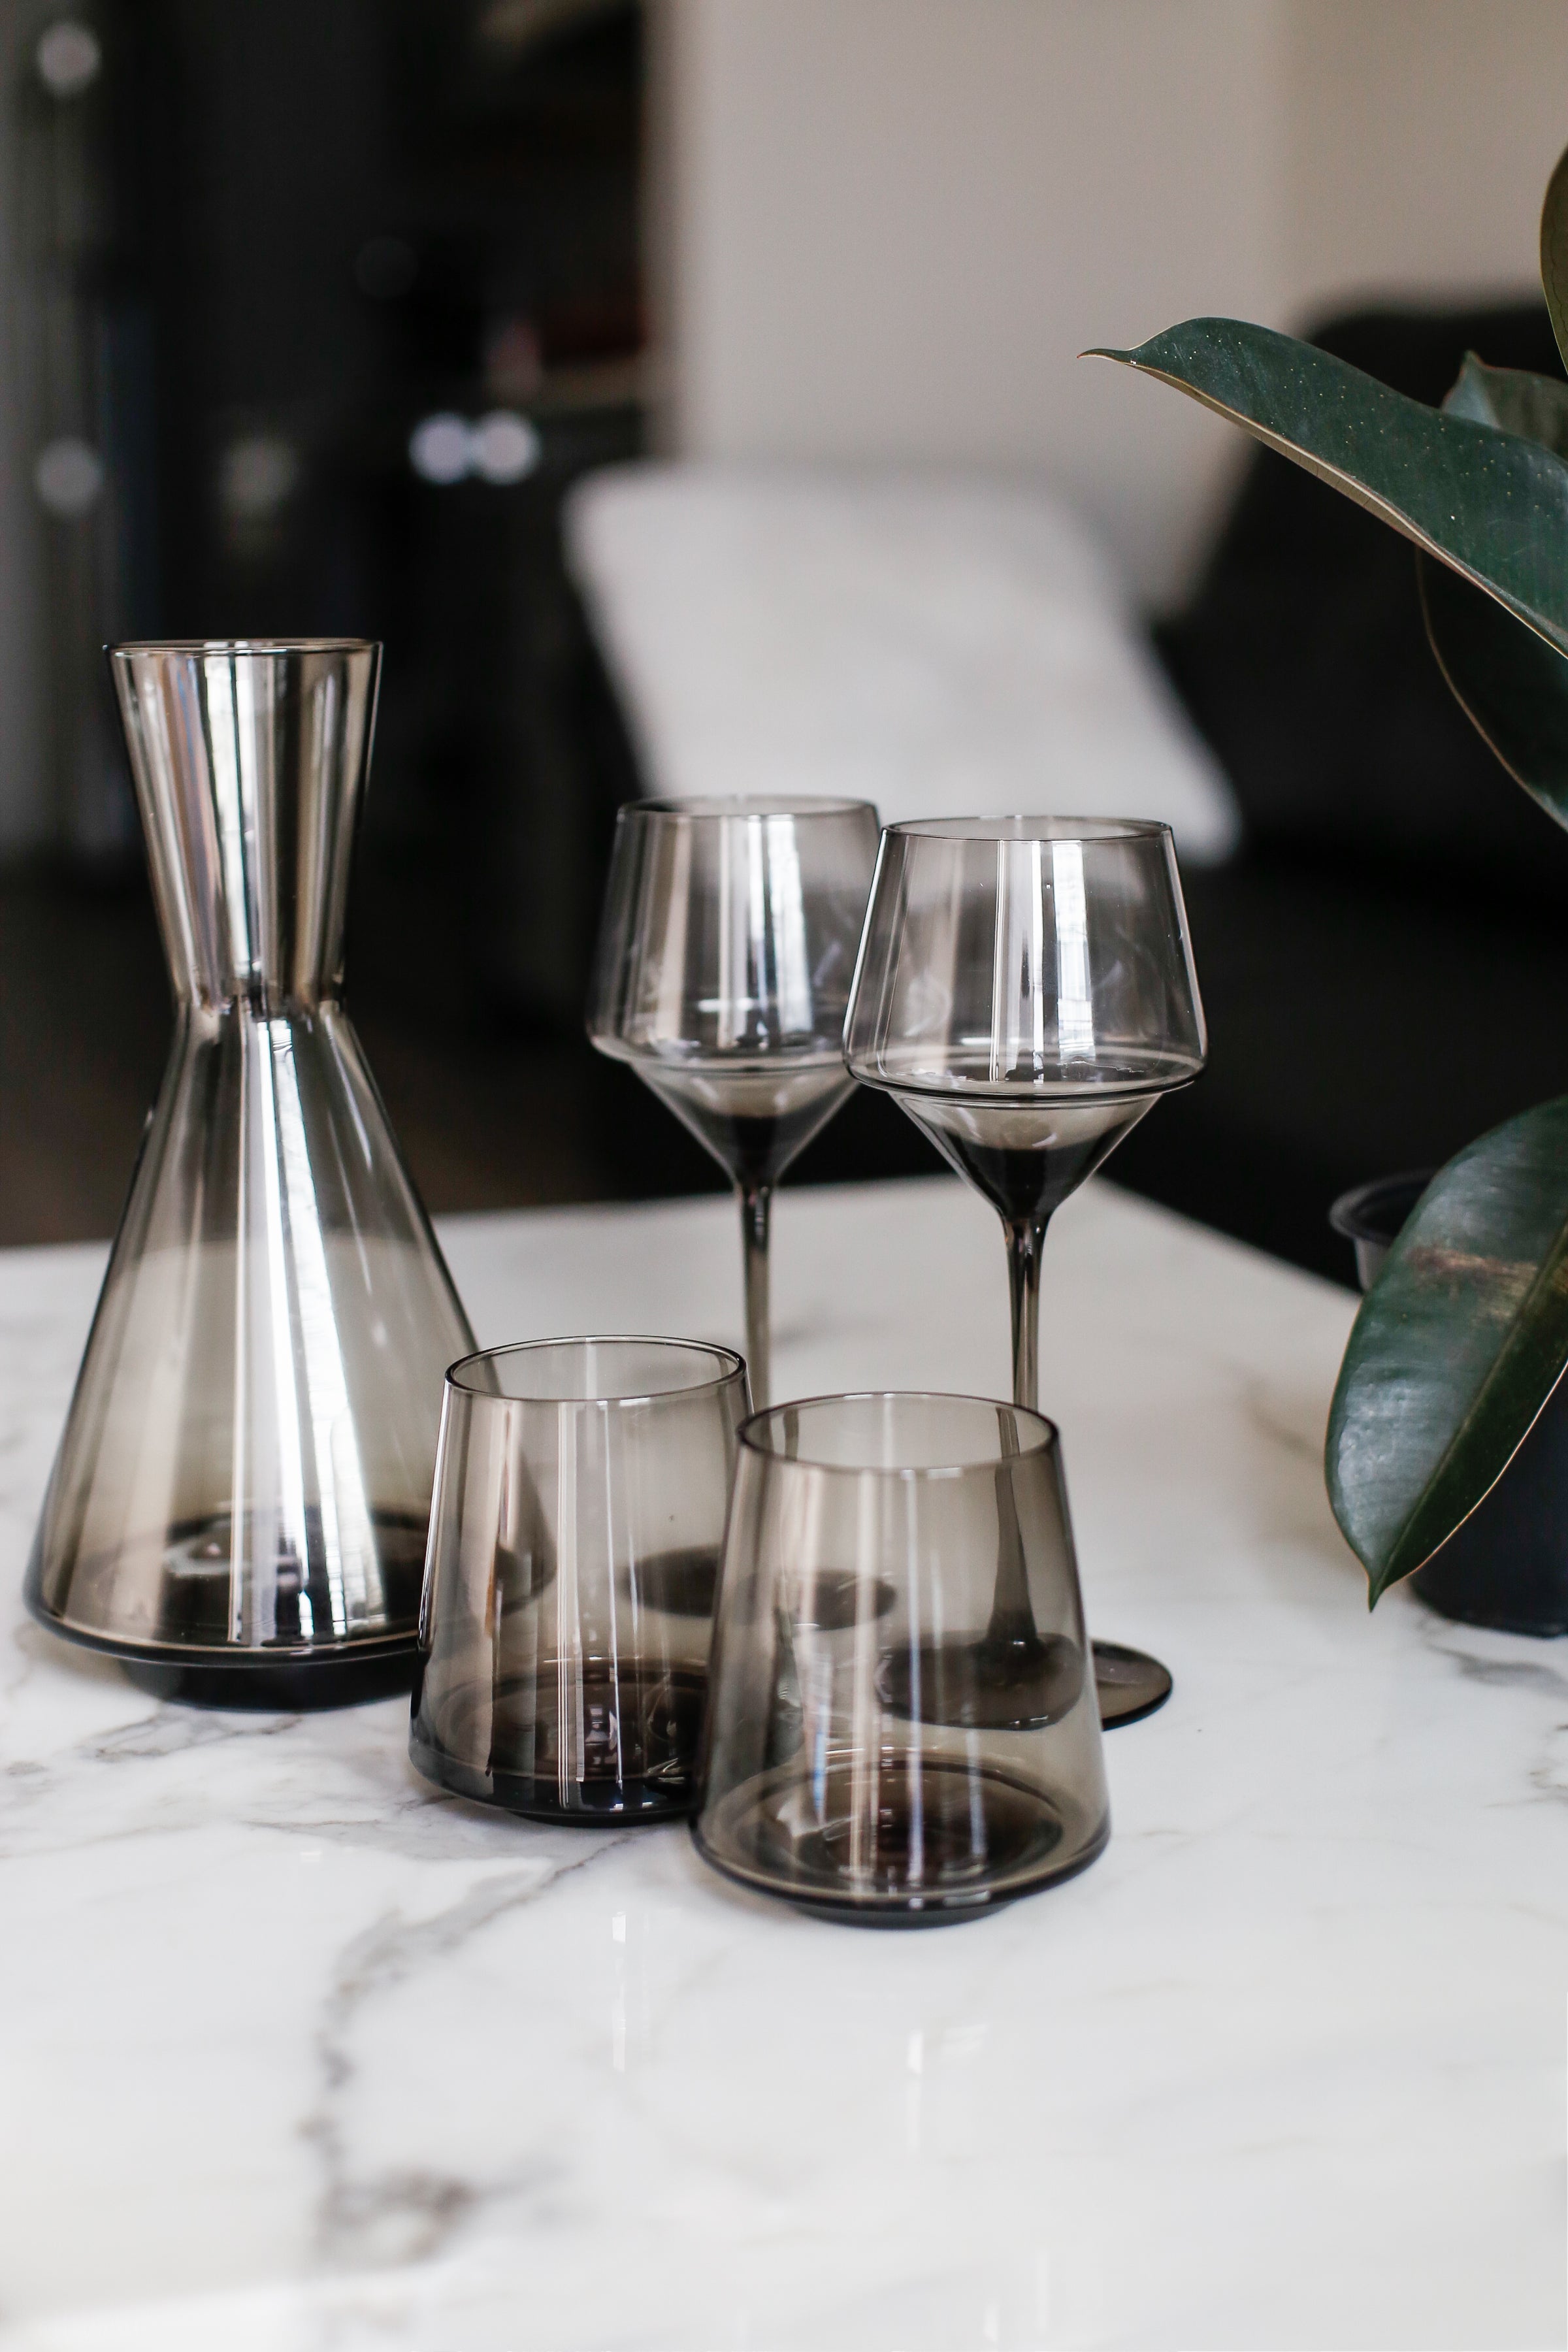 Wine glasses & kitchenware